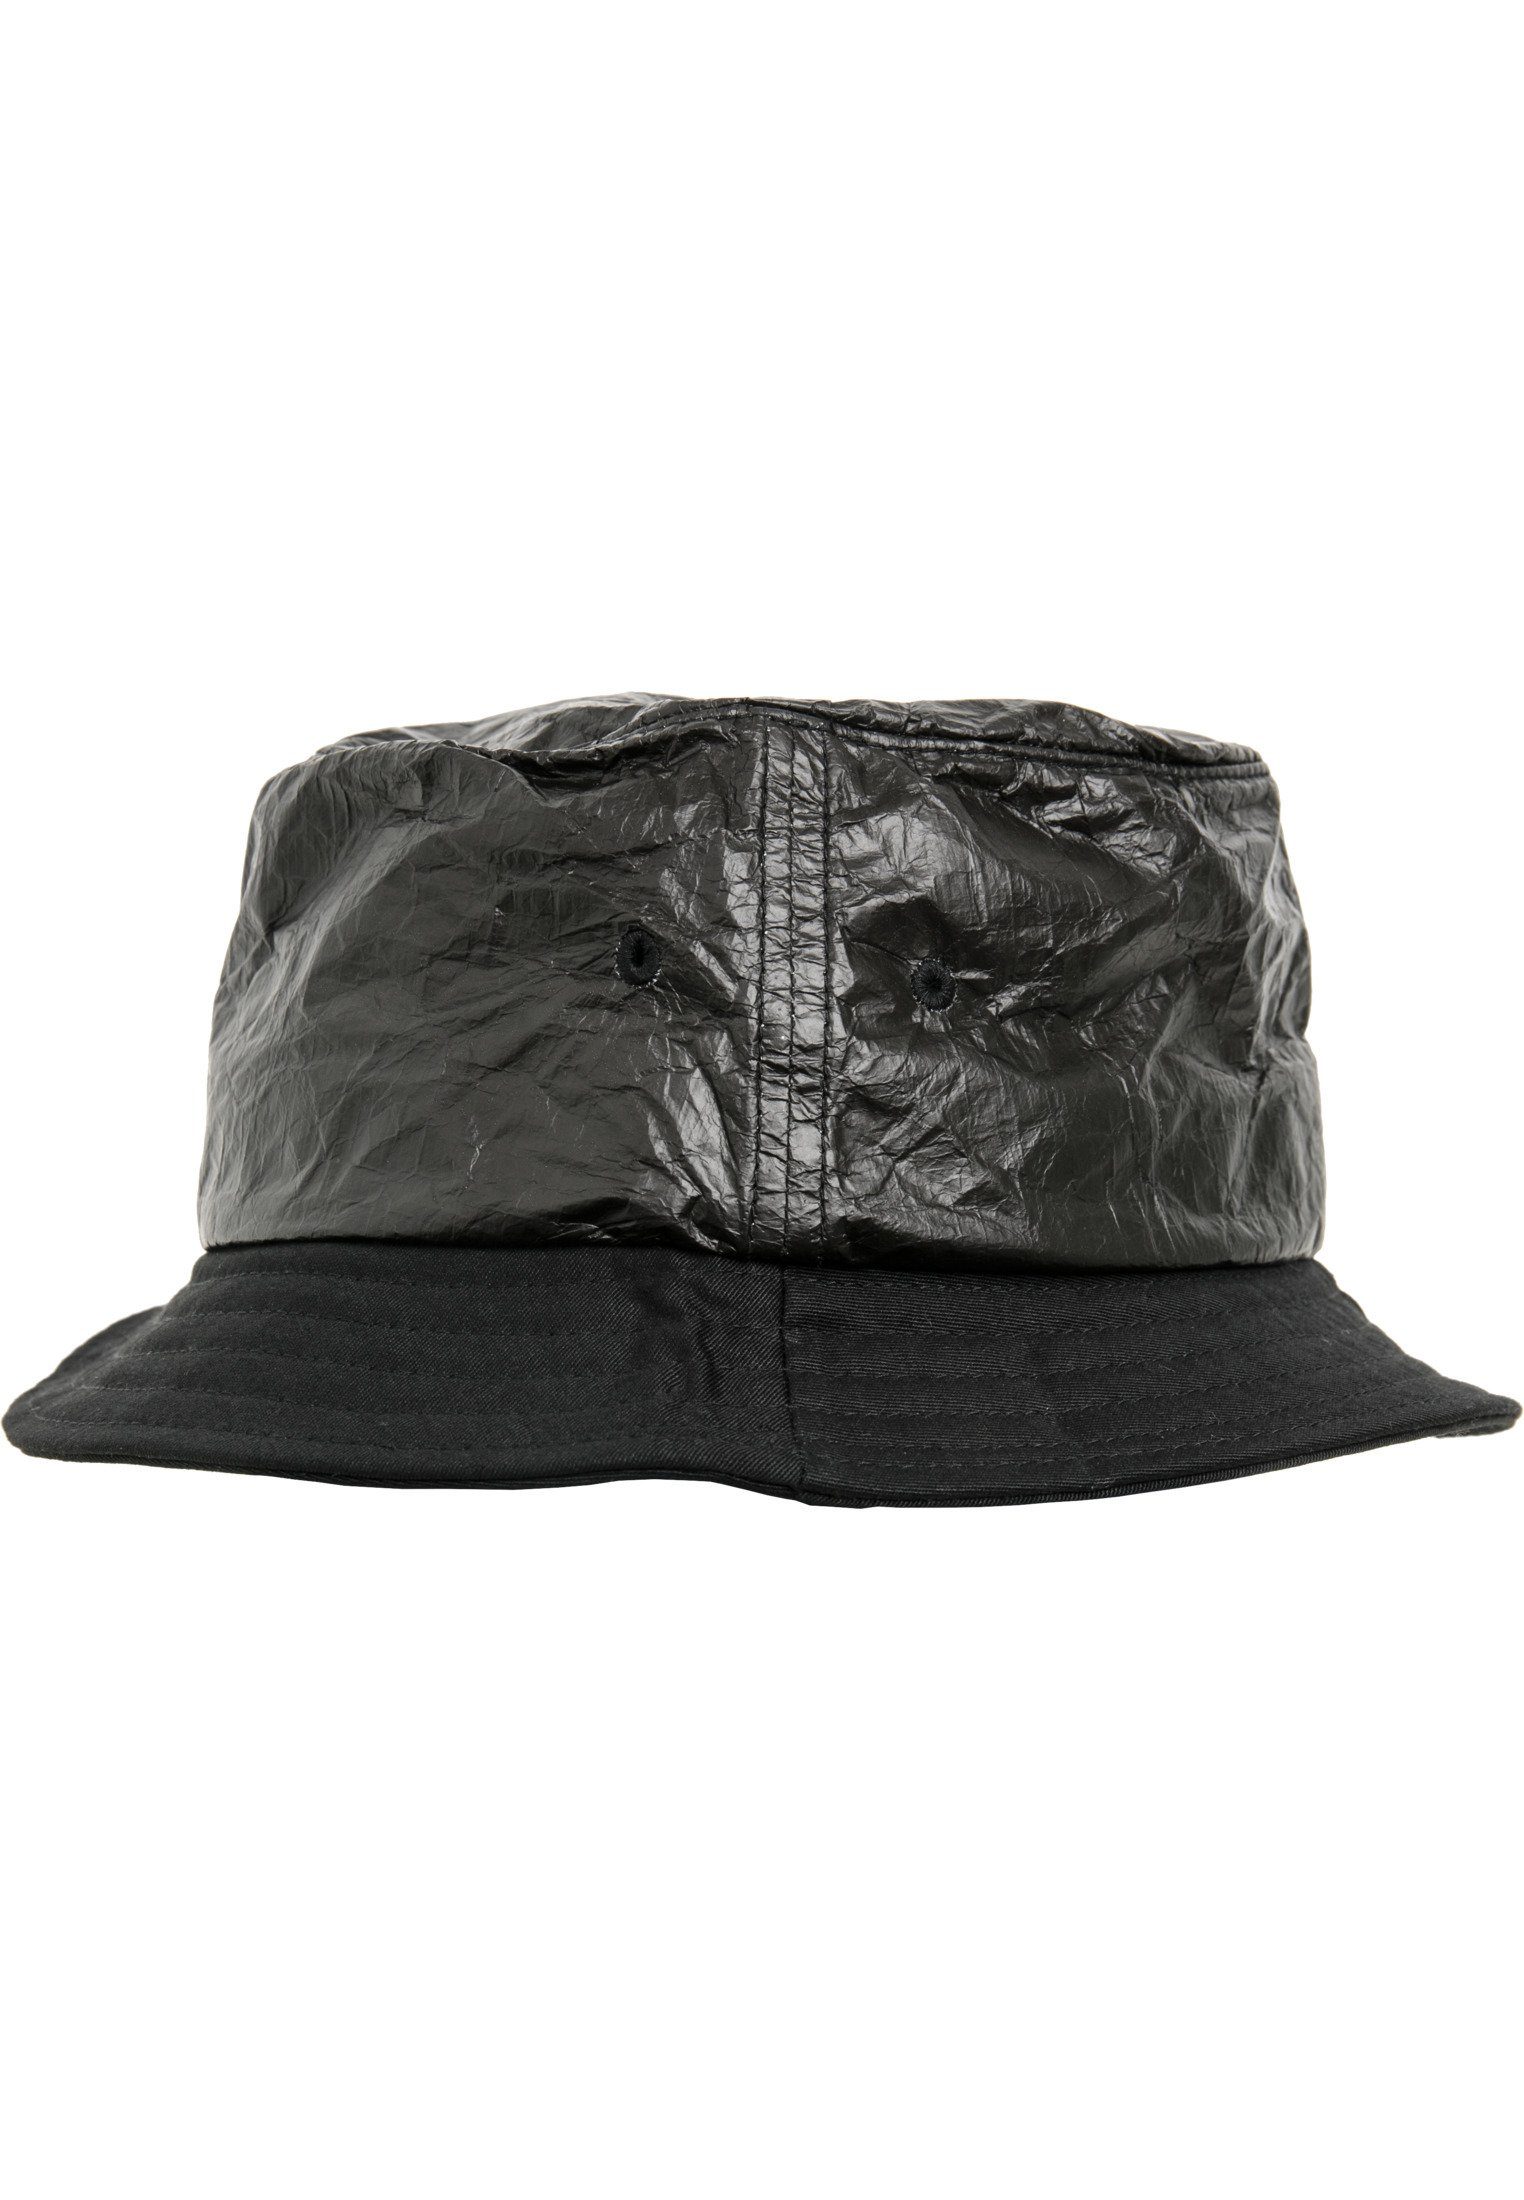 Hat Hat Paper Bucket Cap Crinkled black Bucket Flexfit Flex